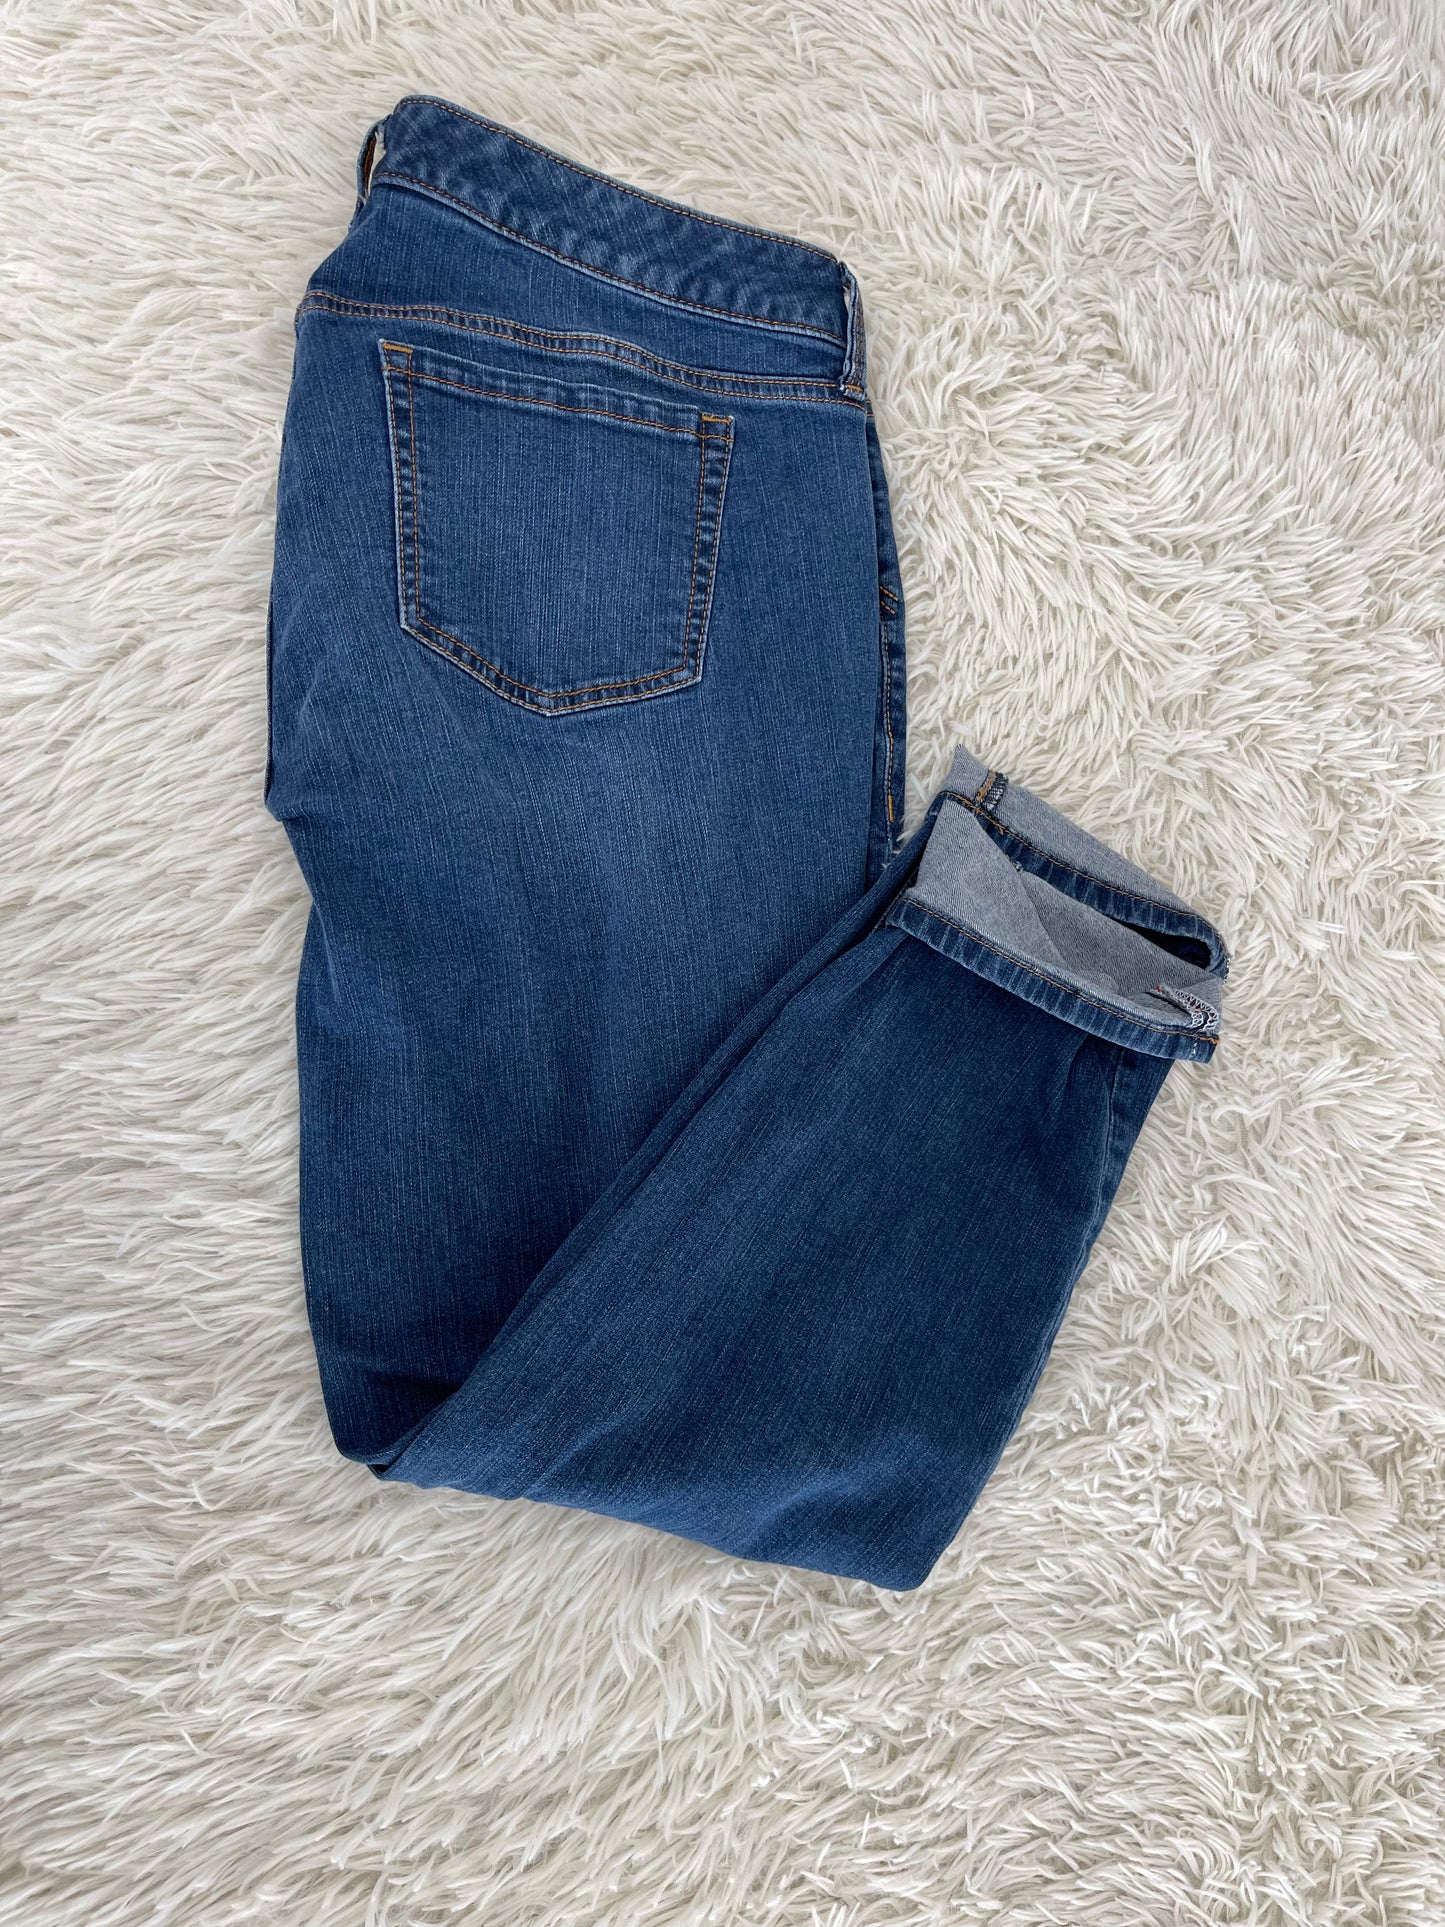 Torrid Boyfriend Fit Jeans - 18 Regular